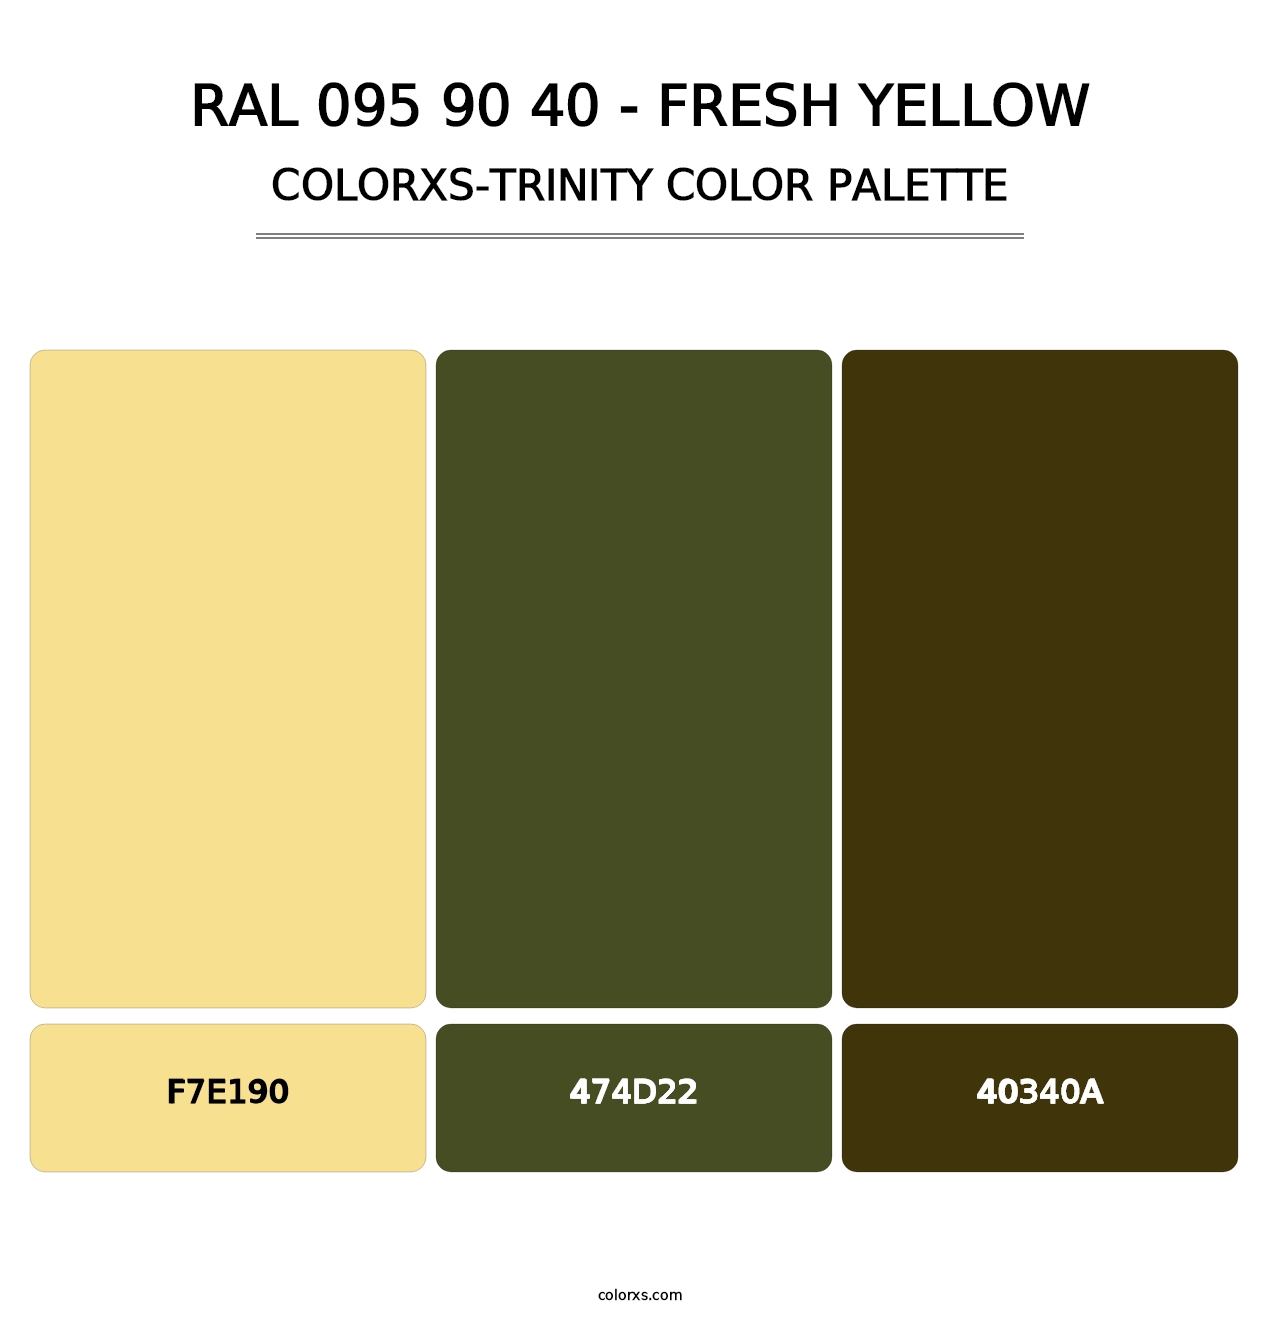 RAL 095 90 40 - Fresh Yellow - Colorxs Trinity Palette